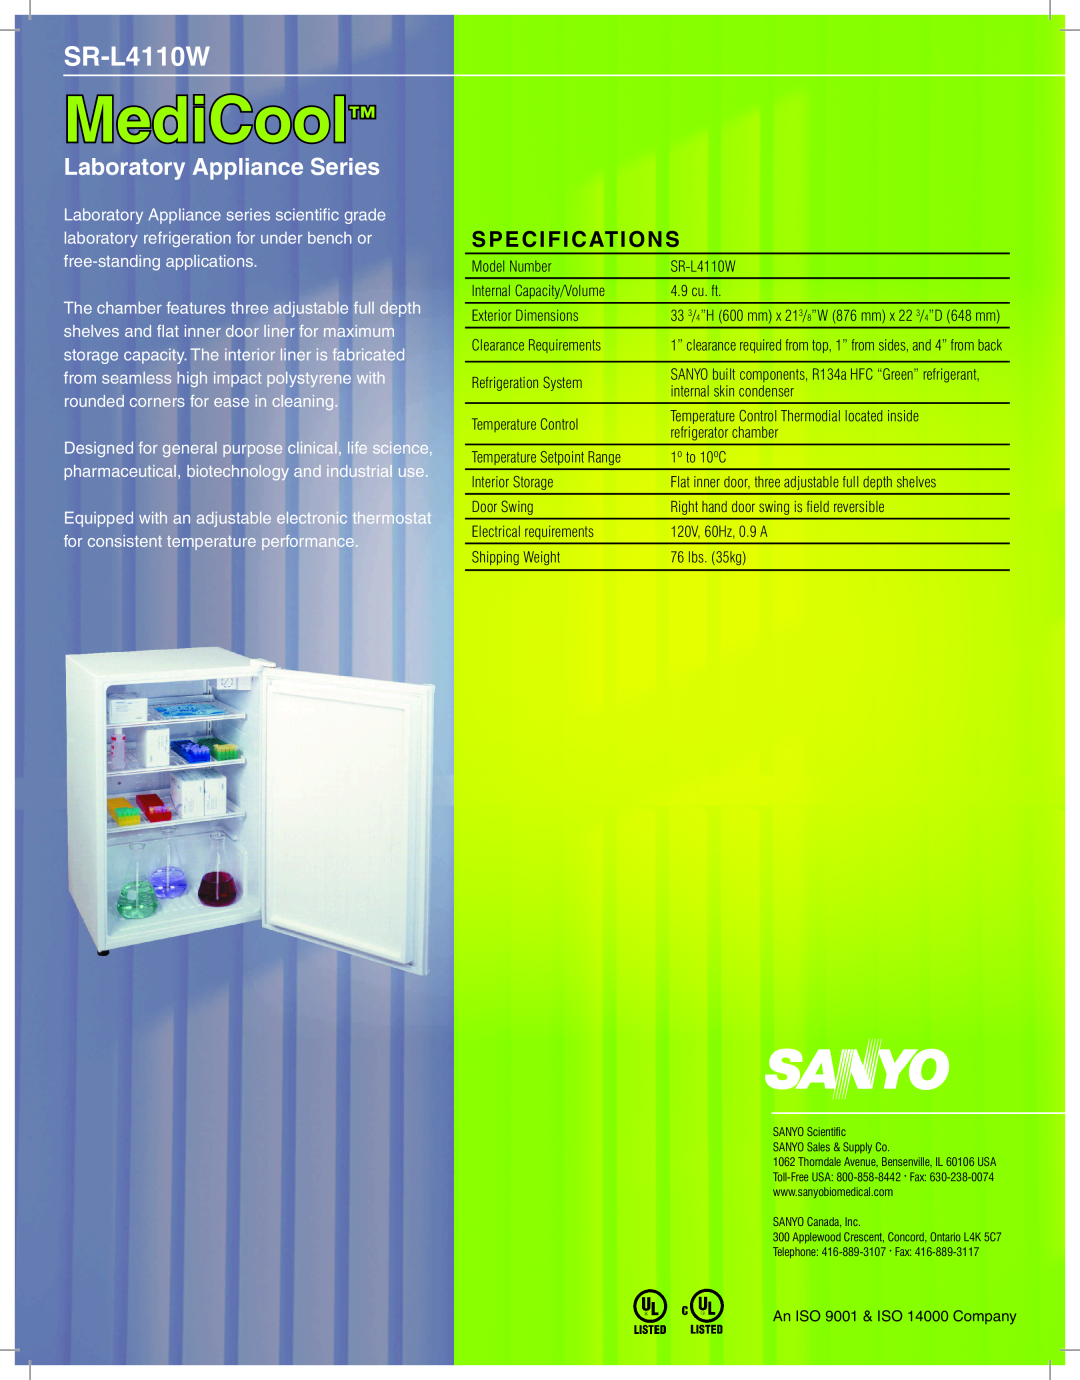 Sanyo SR-L4110W manual MediCool, Laboratory Appliance Series, Specifications 